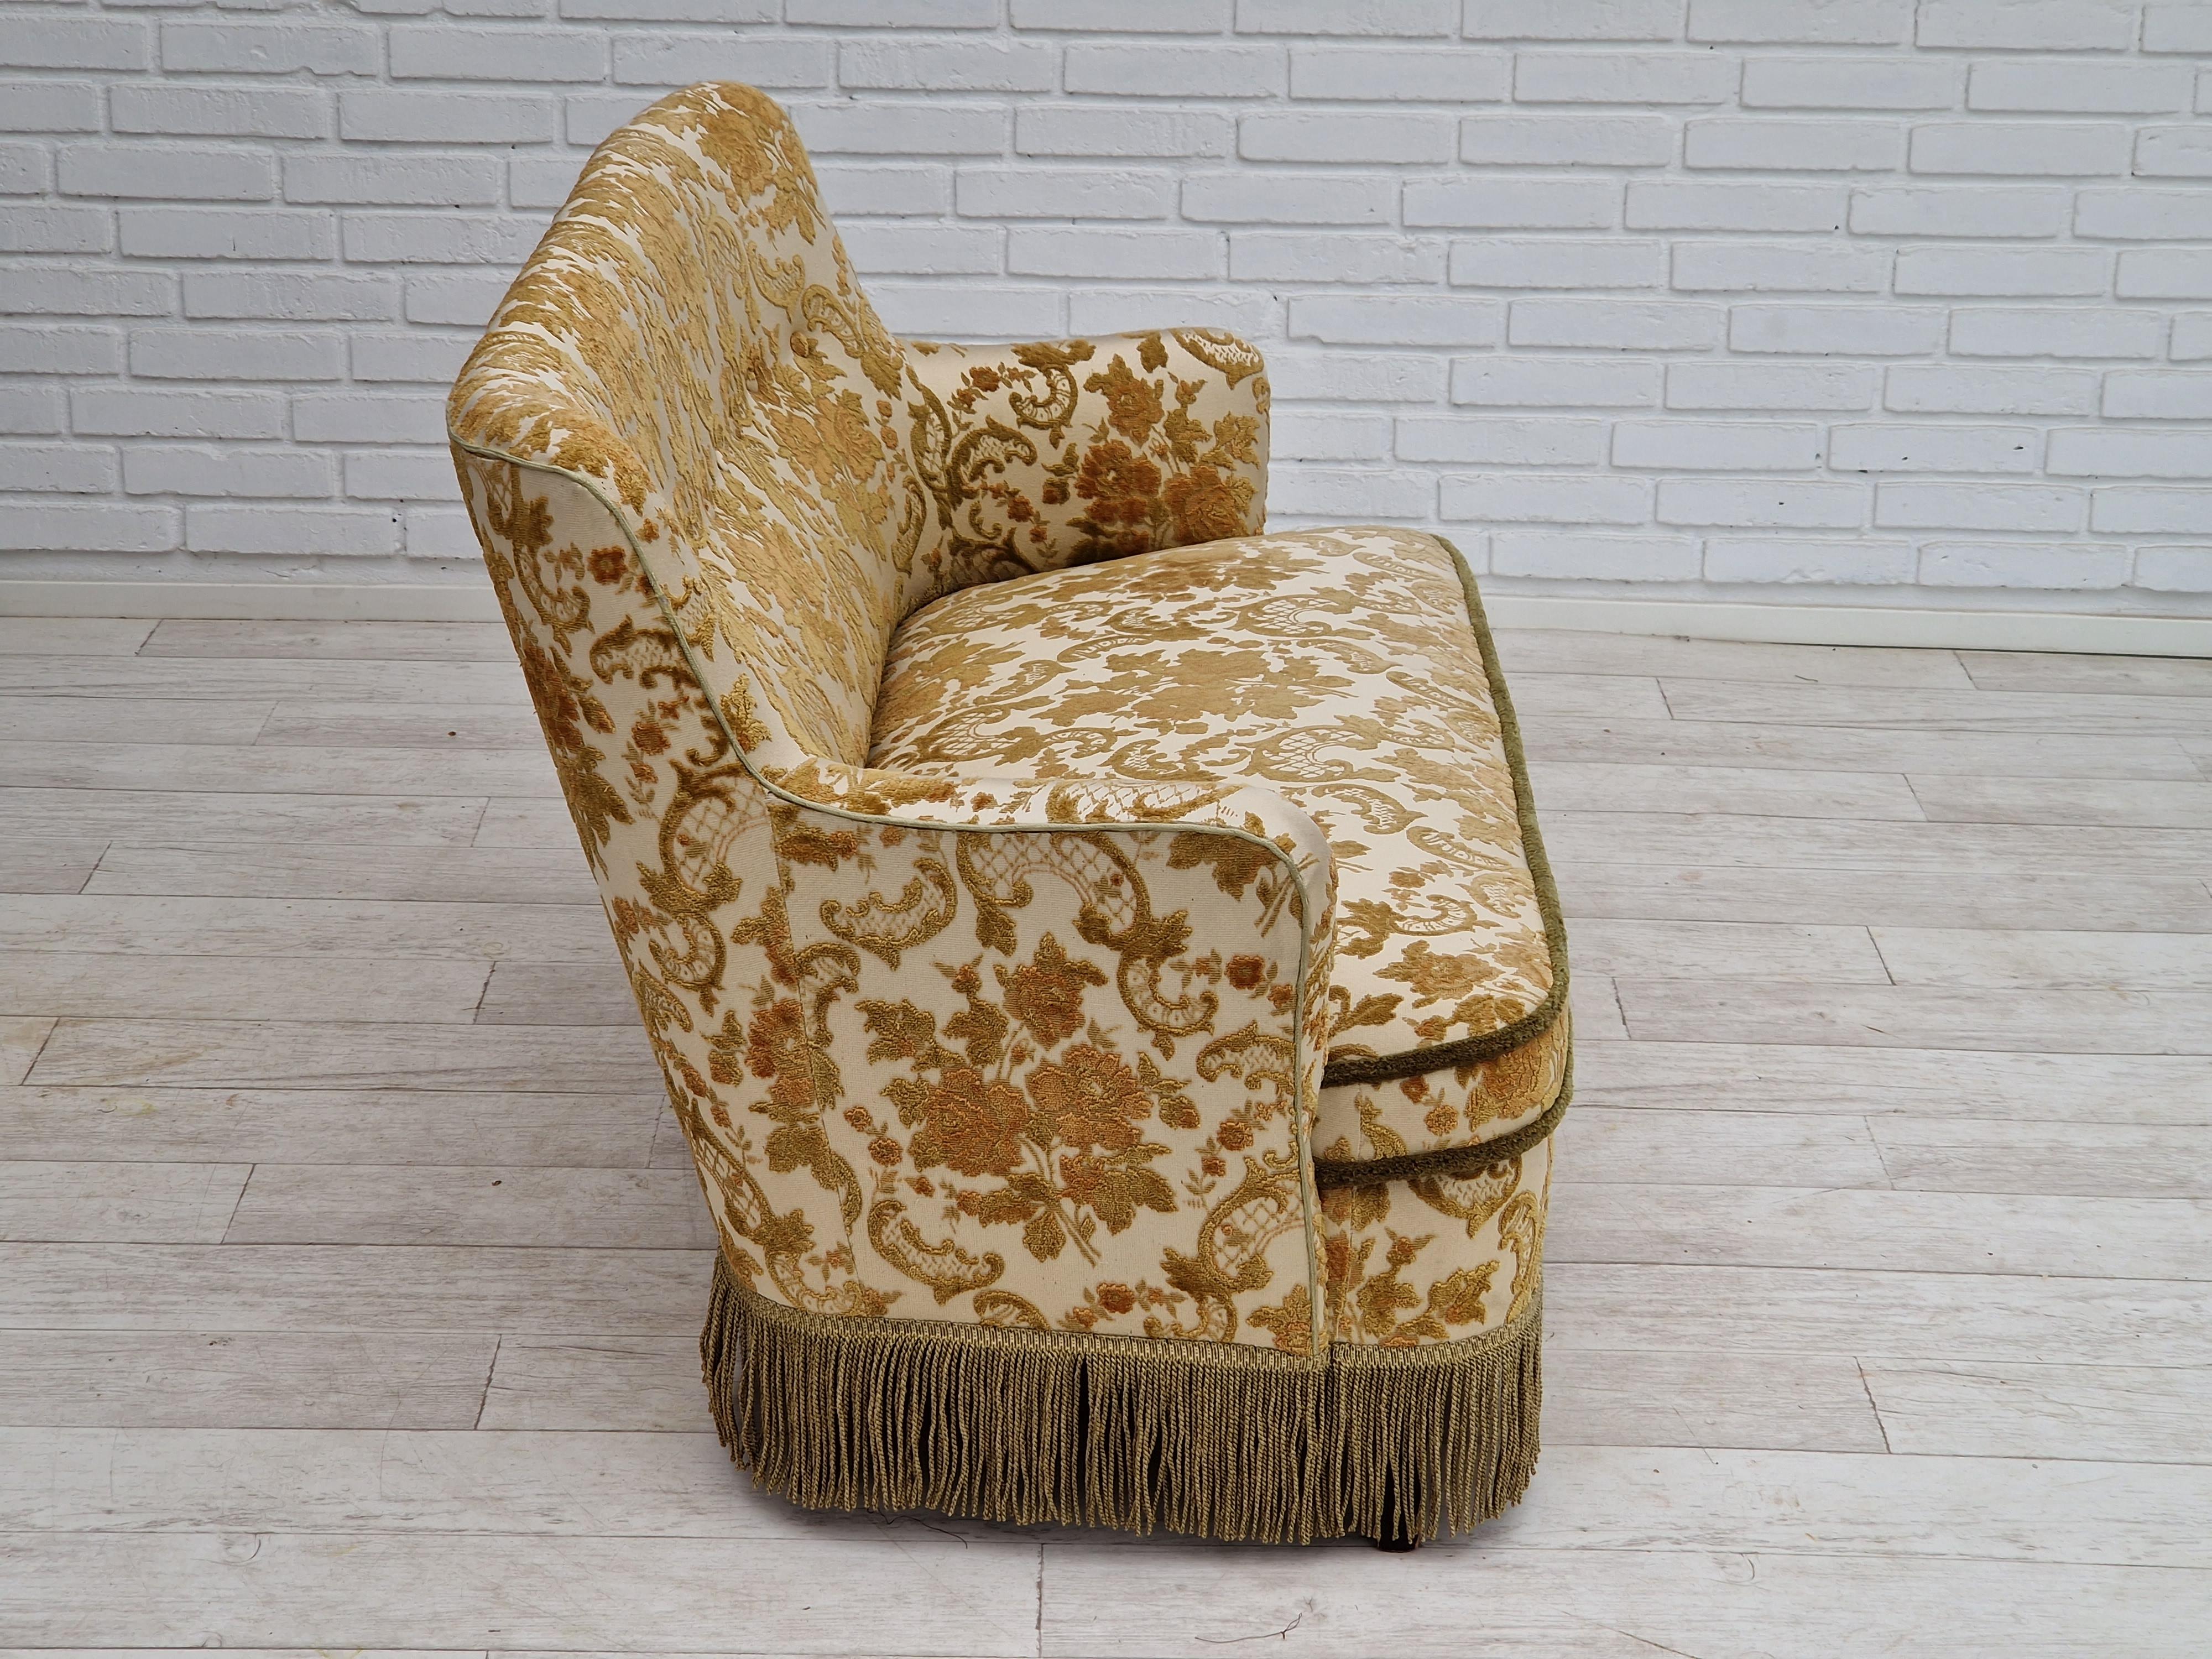 Scandinavian Modern 1960s, Danish velour 2 seater sofa, original condition, beech wood.